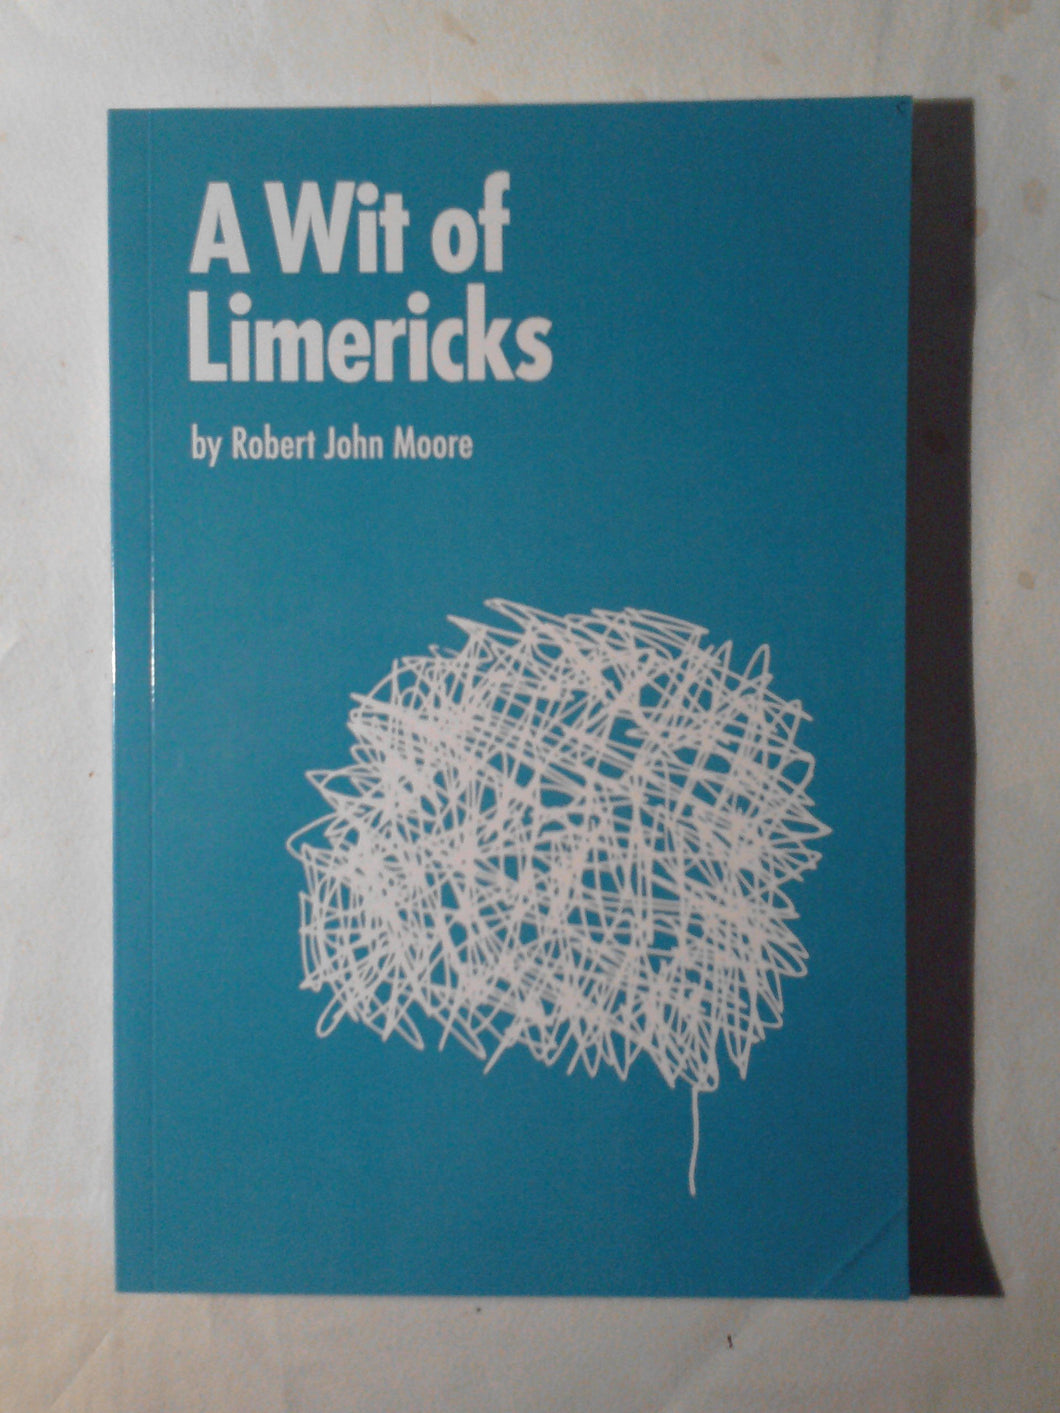 A Wit of Limericks